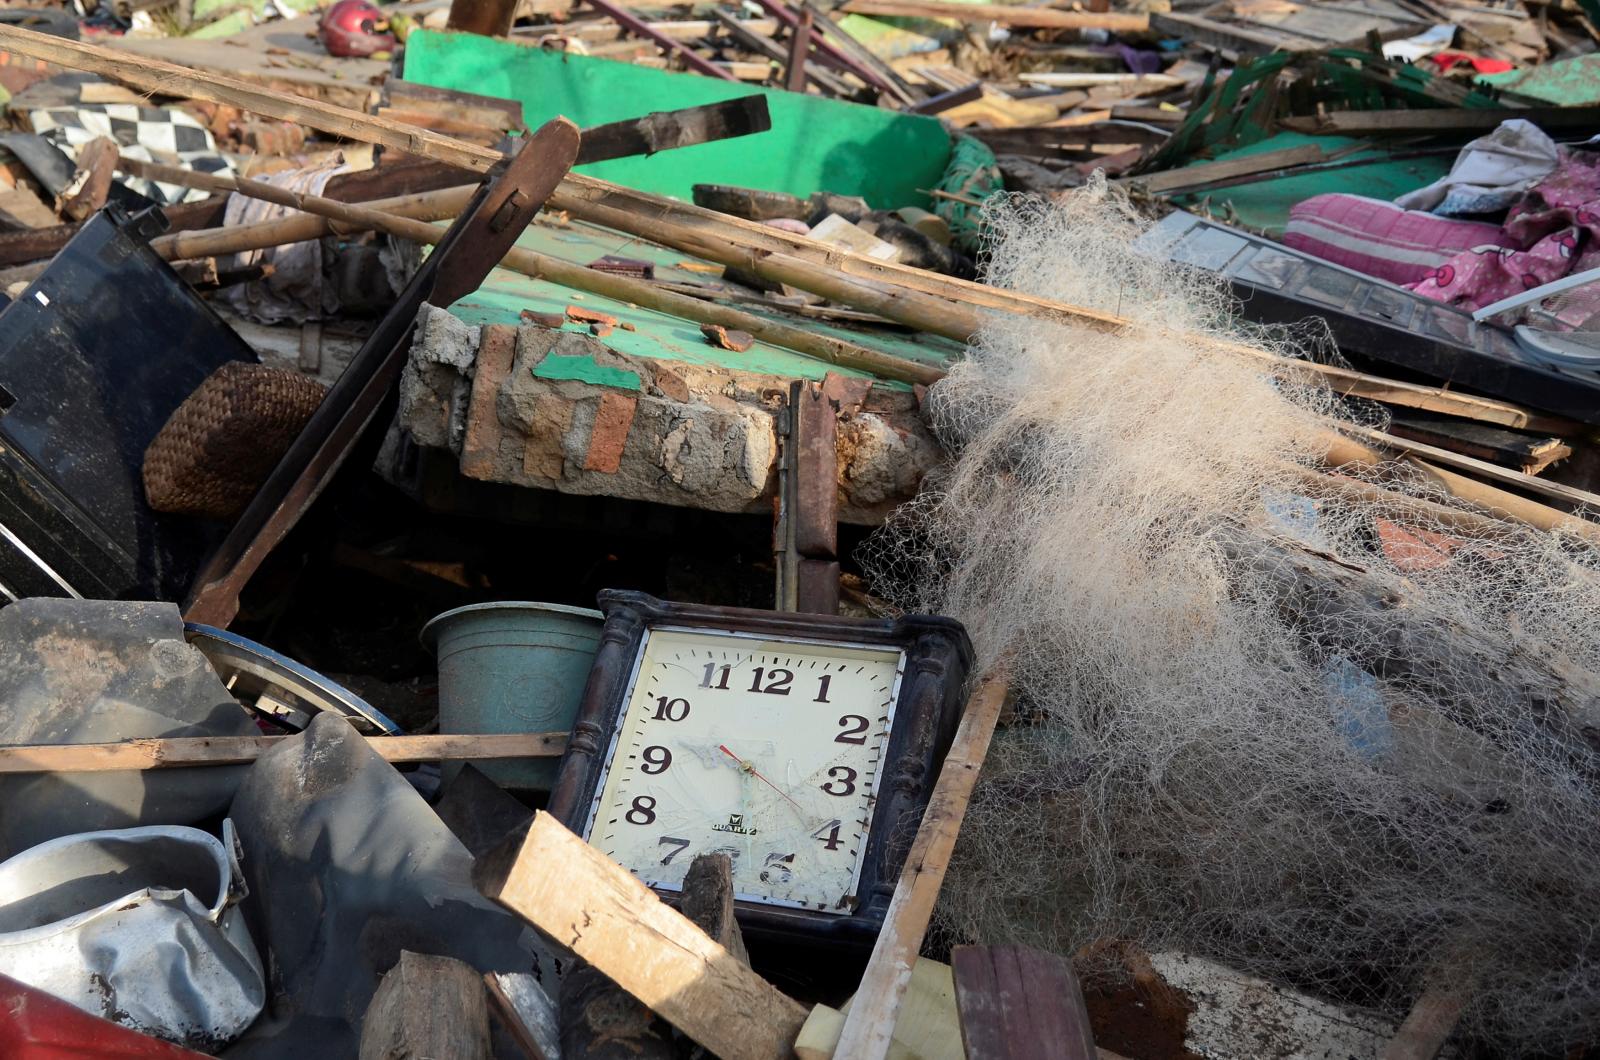 Indonesia's latest tsunami raises global questions over disaster preparedness